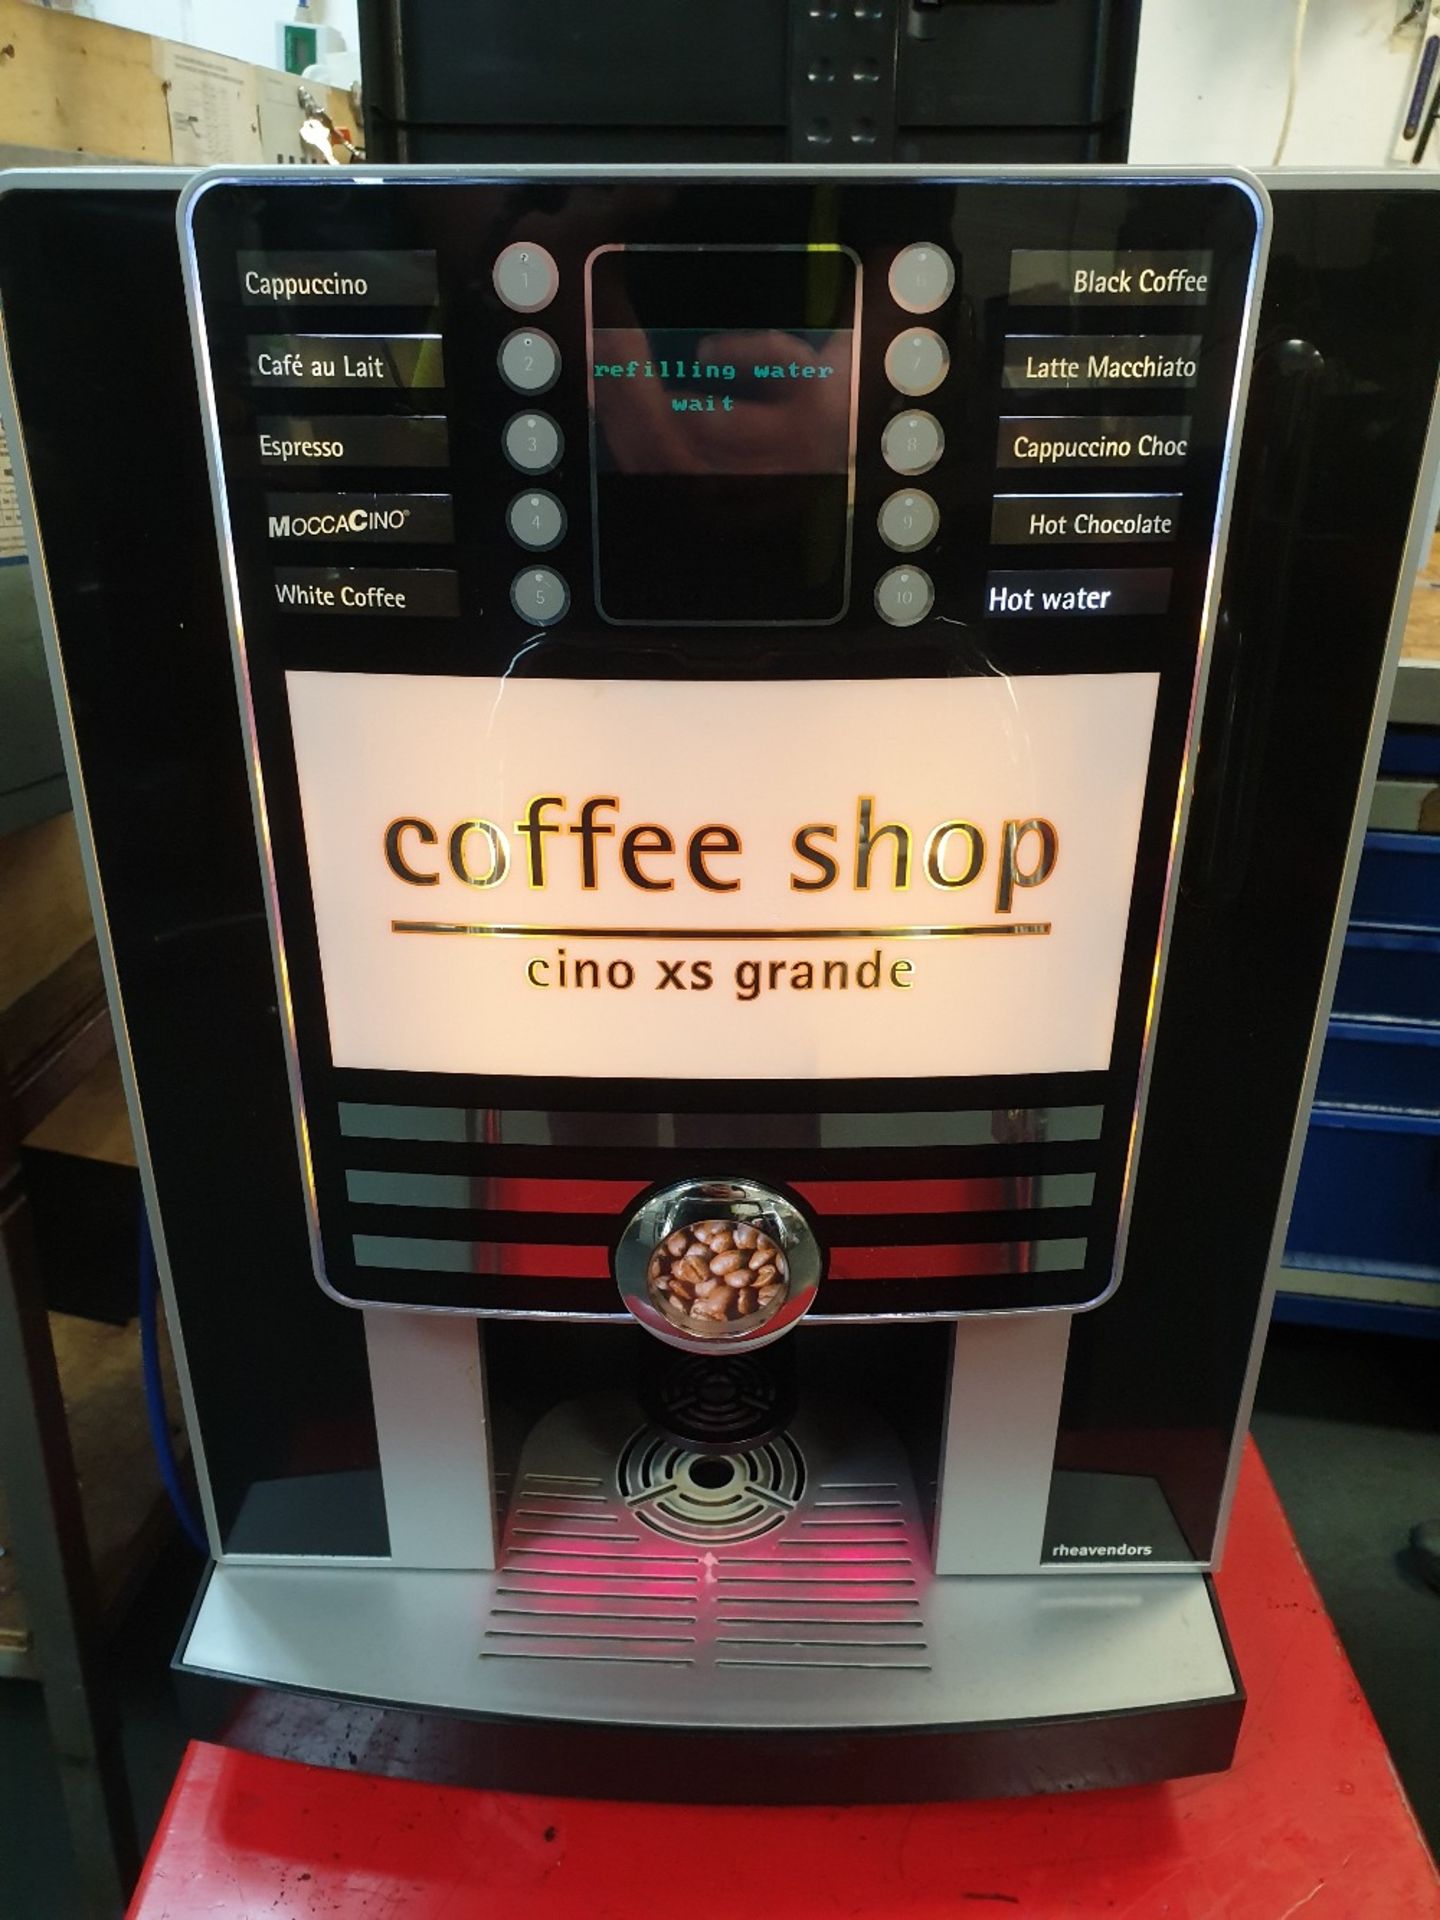 The Rheavendors Cino XS Grande Coffee Machine